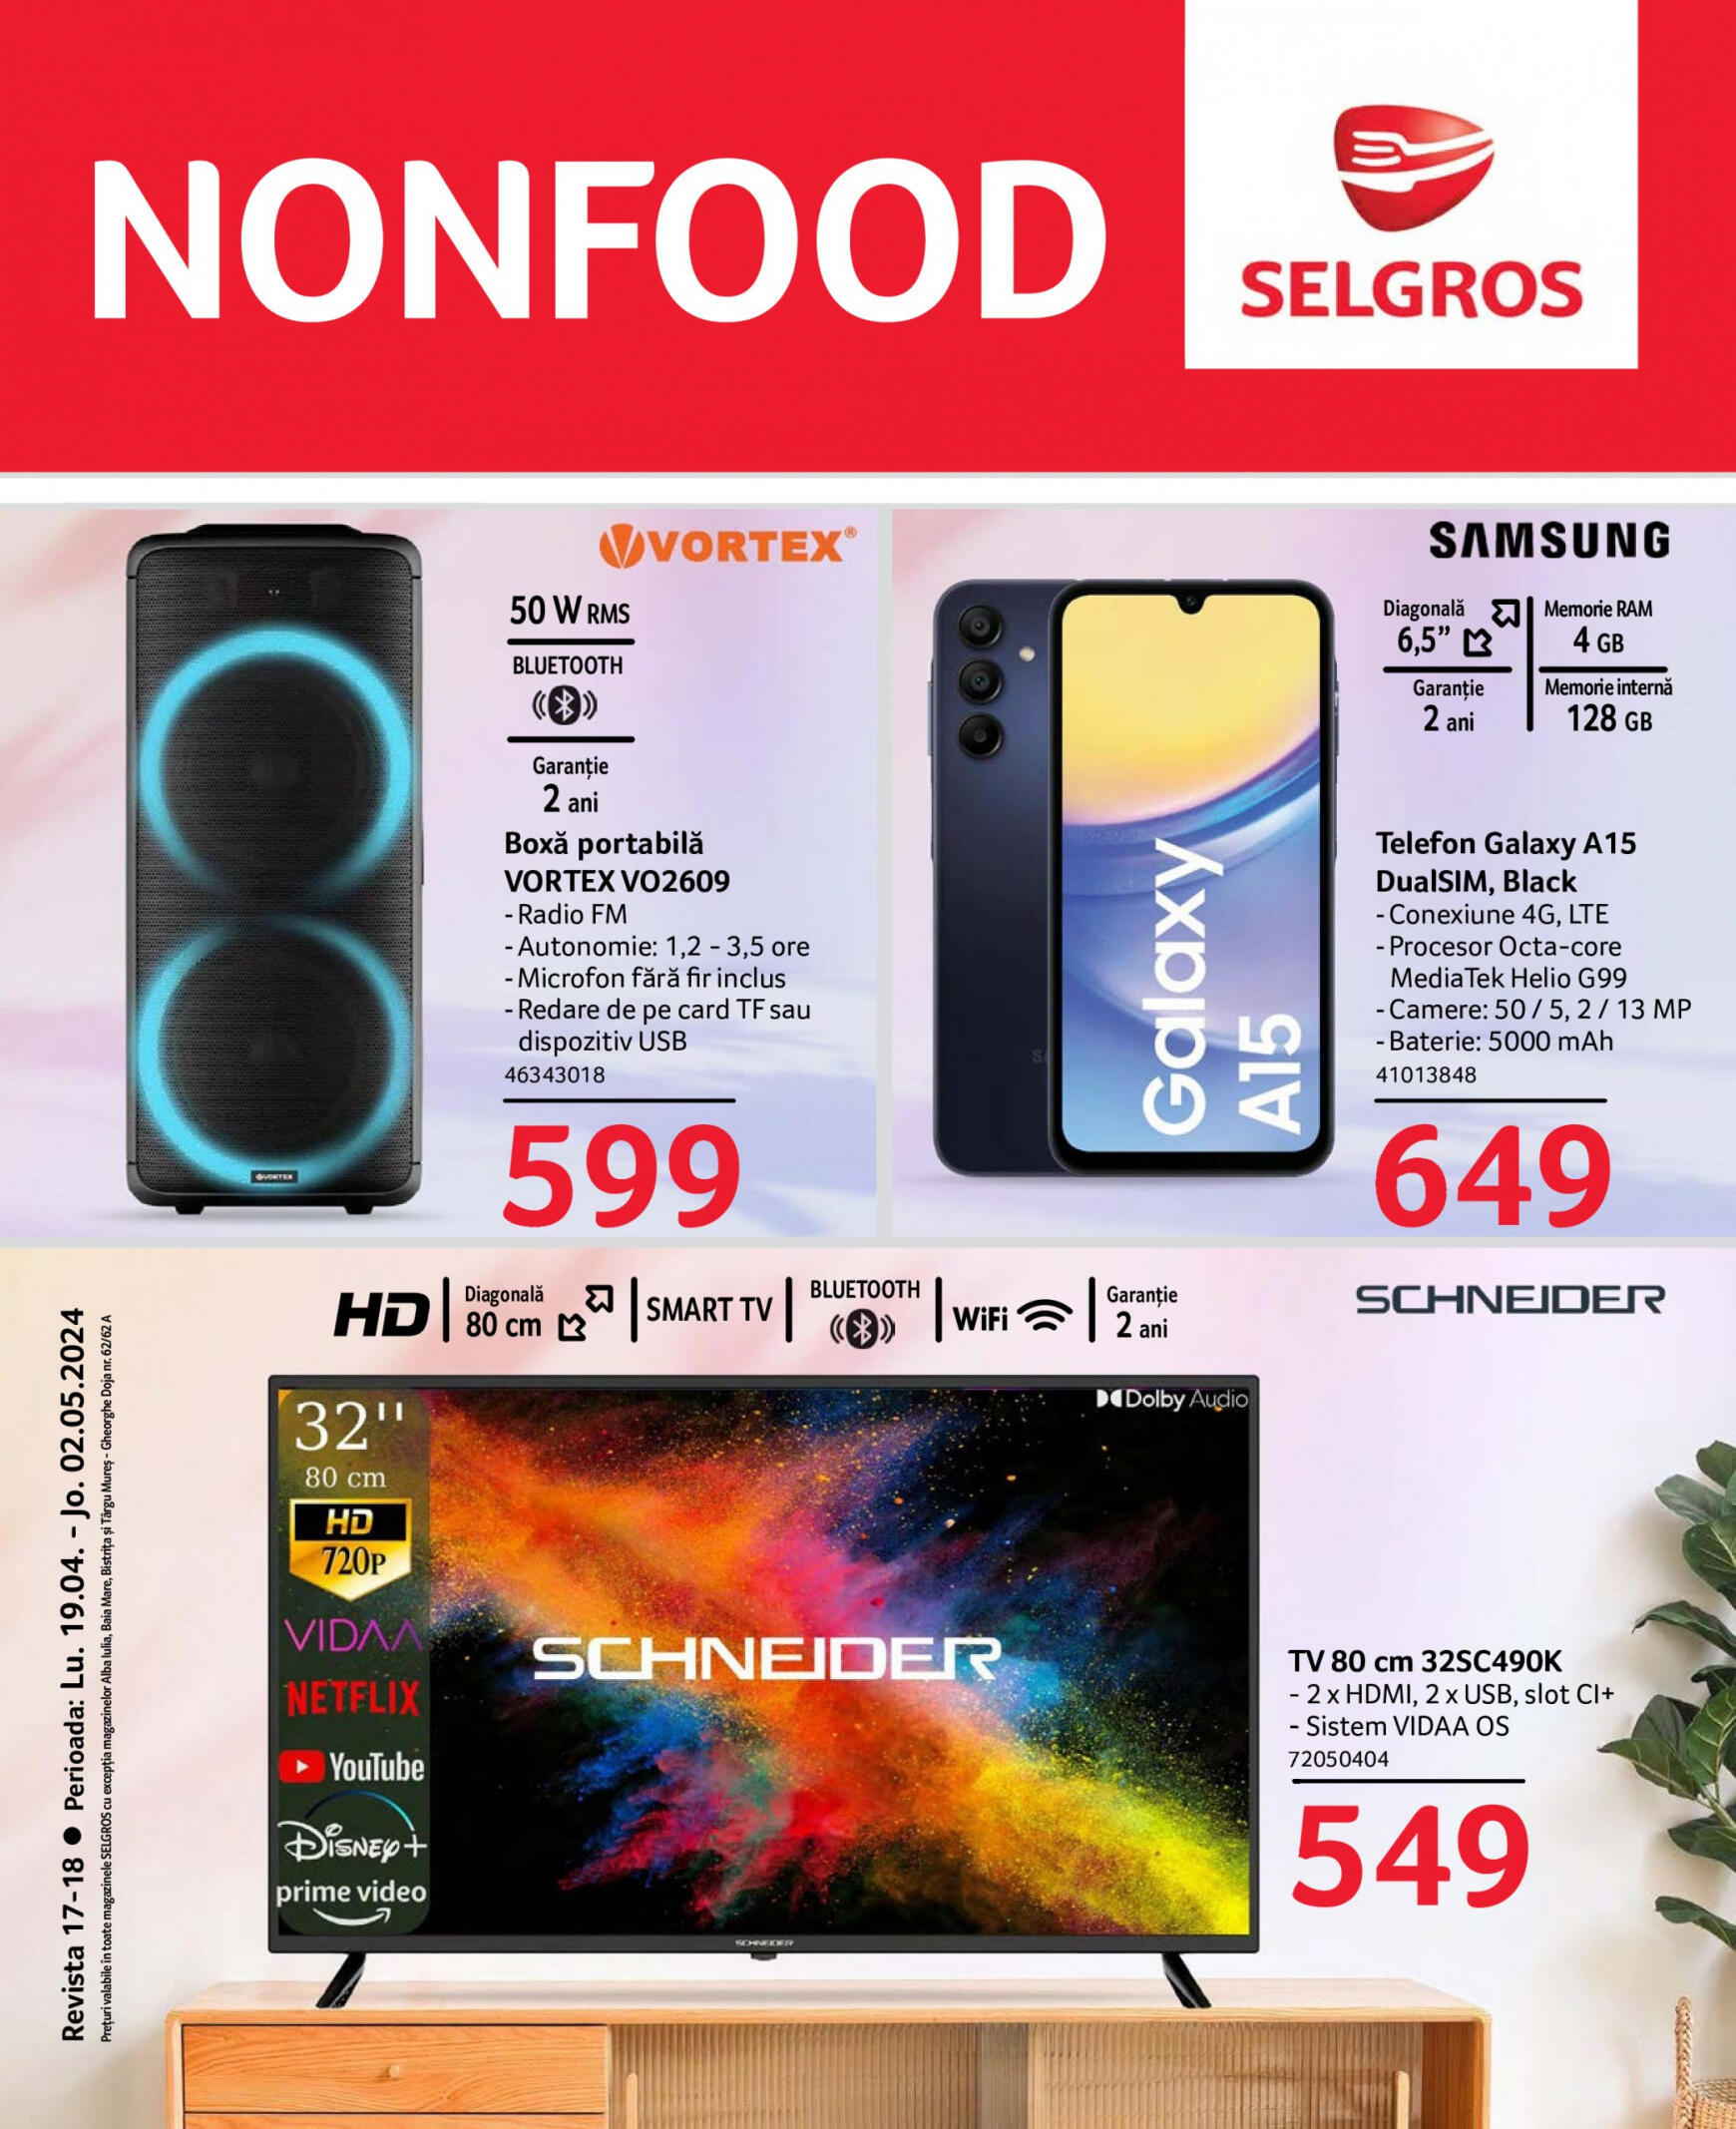 selgros - Catalog nou Selgros - Nonfood 19.04. - 02.05. - page: 1